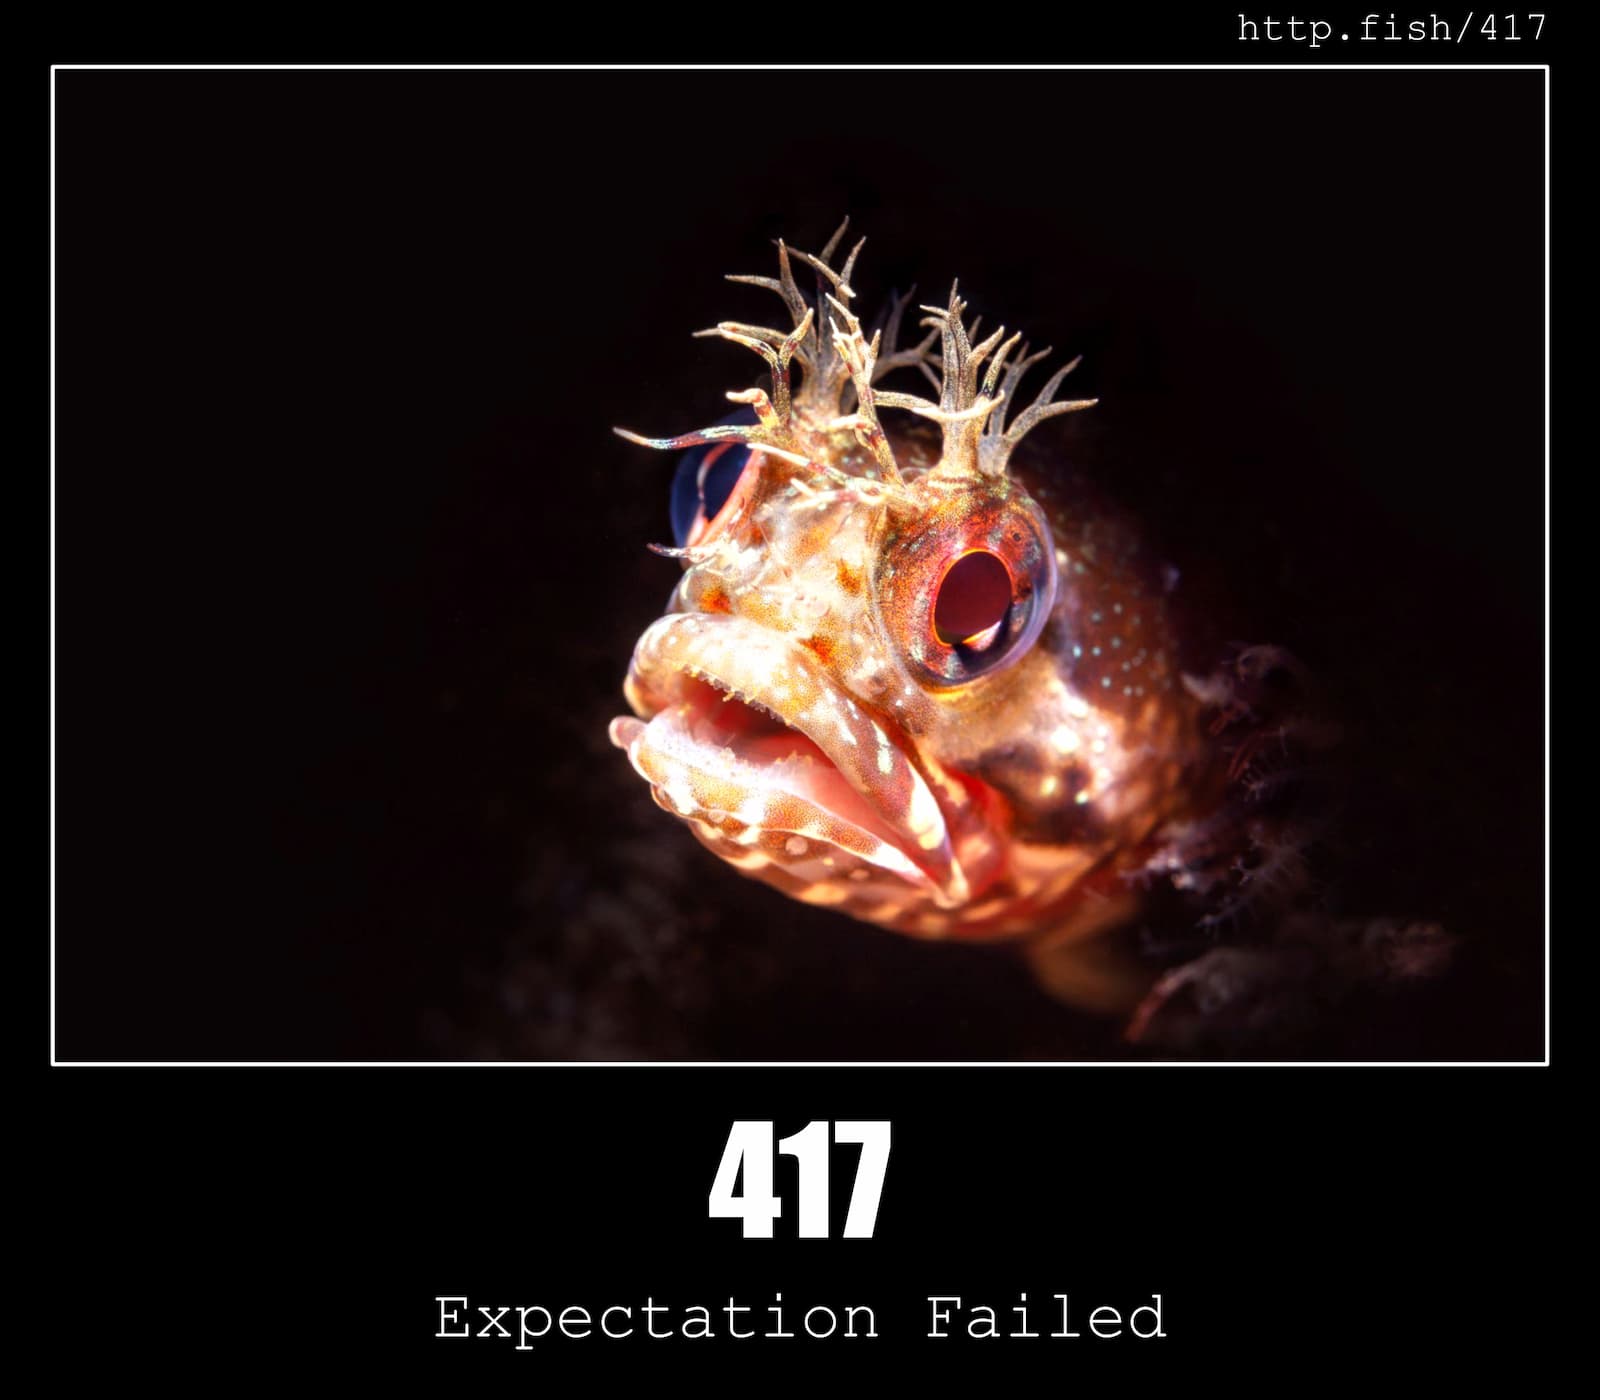 HTTP Status Code 417 Expectation Failed & Fish